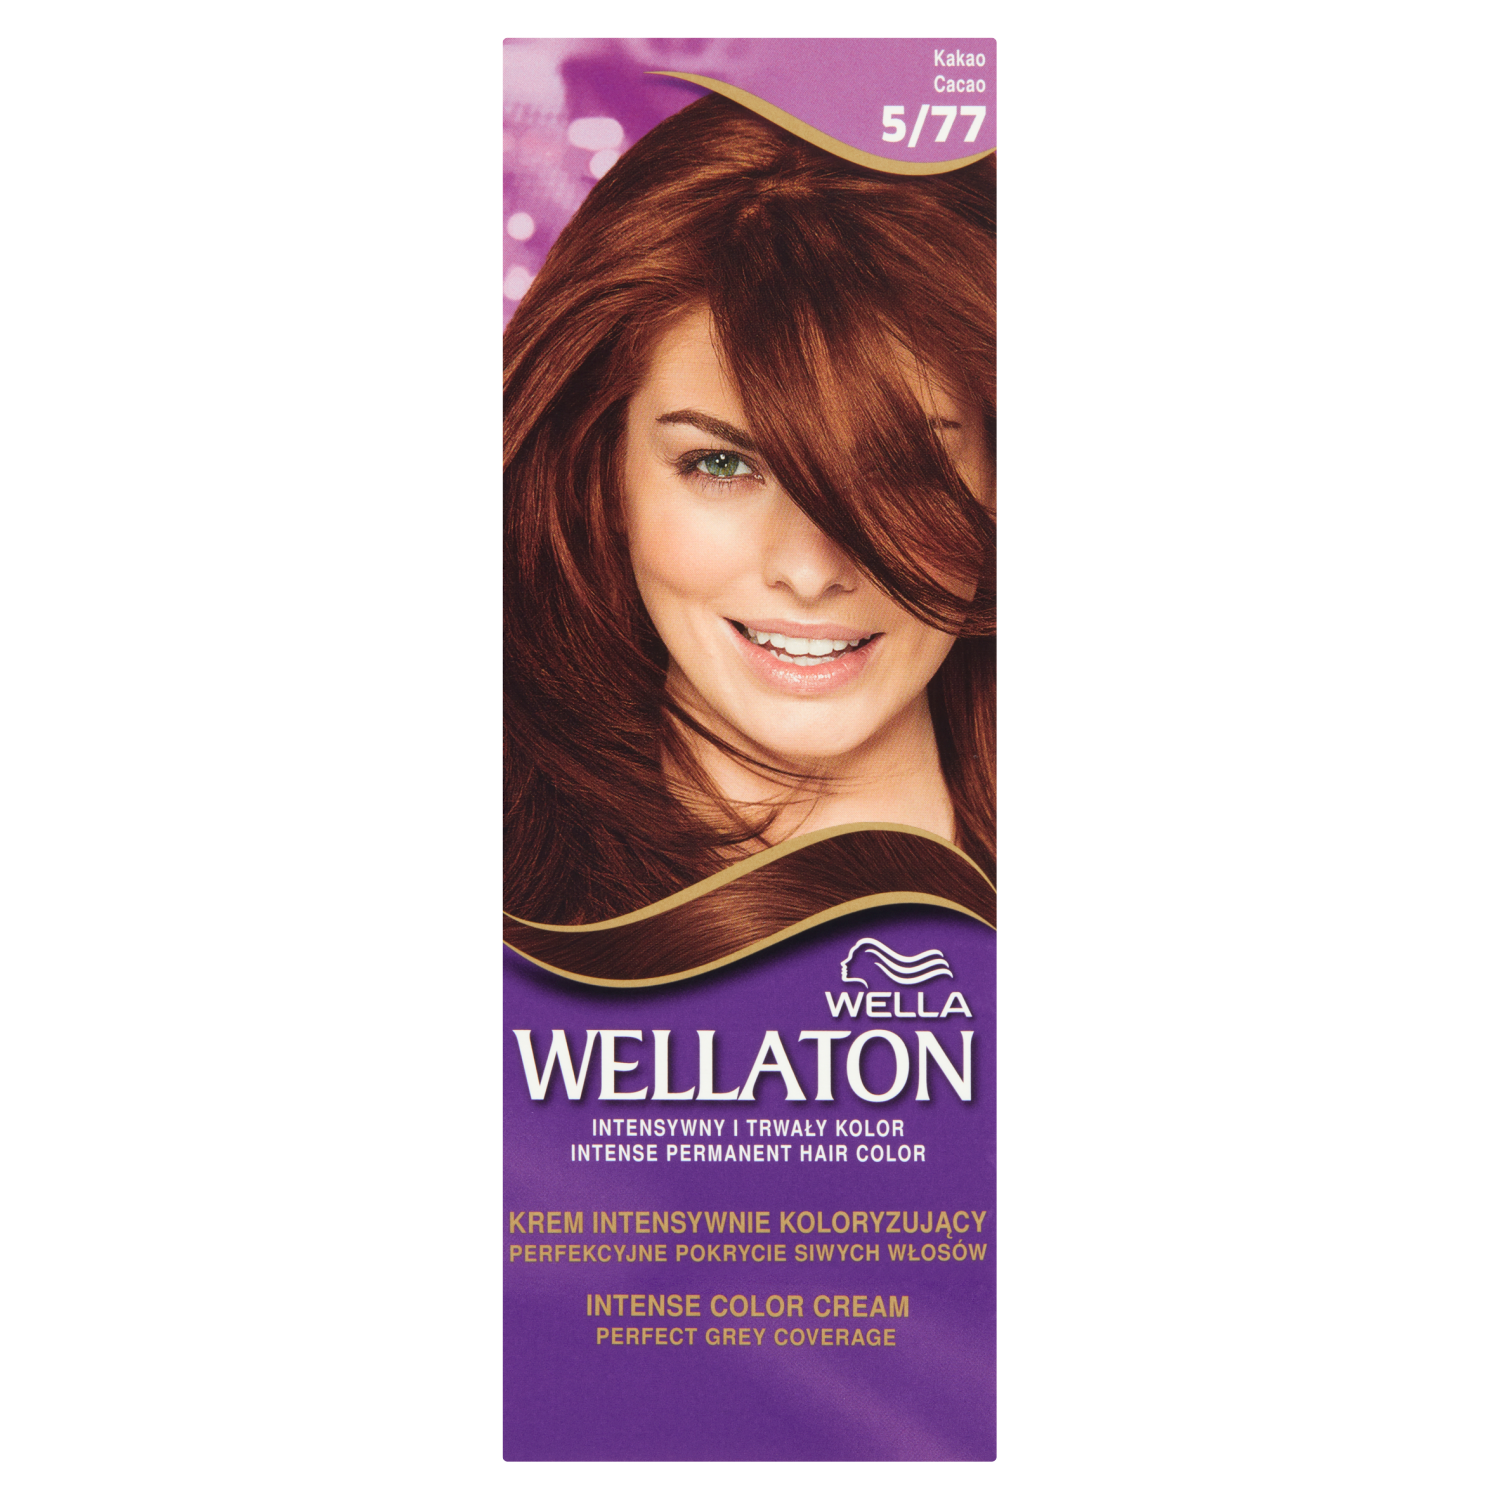 Wella Wellaton крем-краска для волос 5/77 темный шоколад, 1 упаковка цена и фото